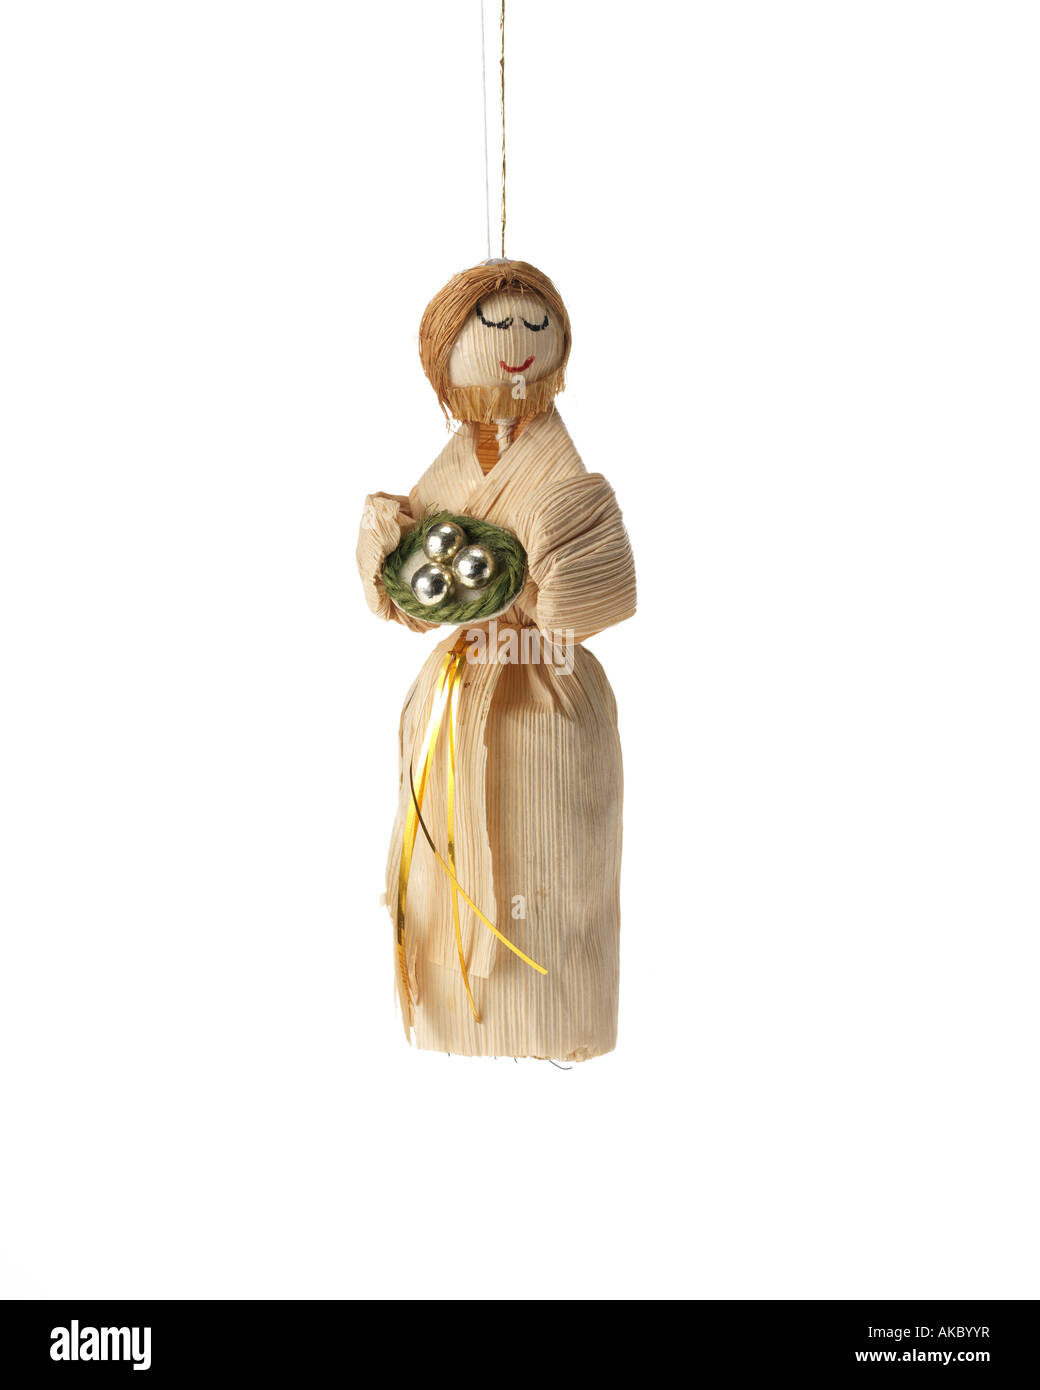 Cosse de maïs doll Christmas ornament Banque D'Images